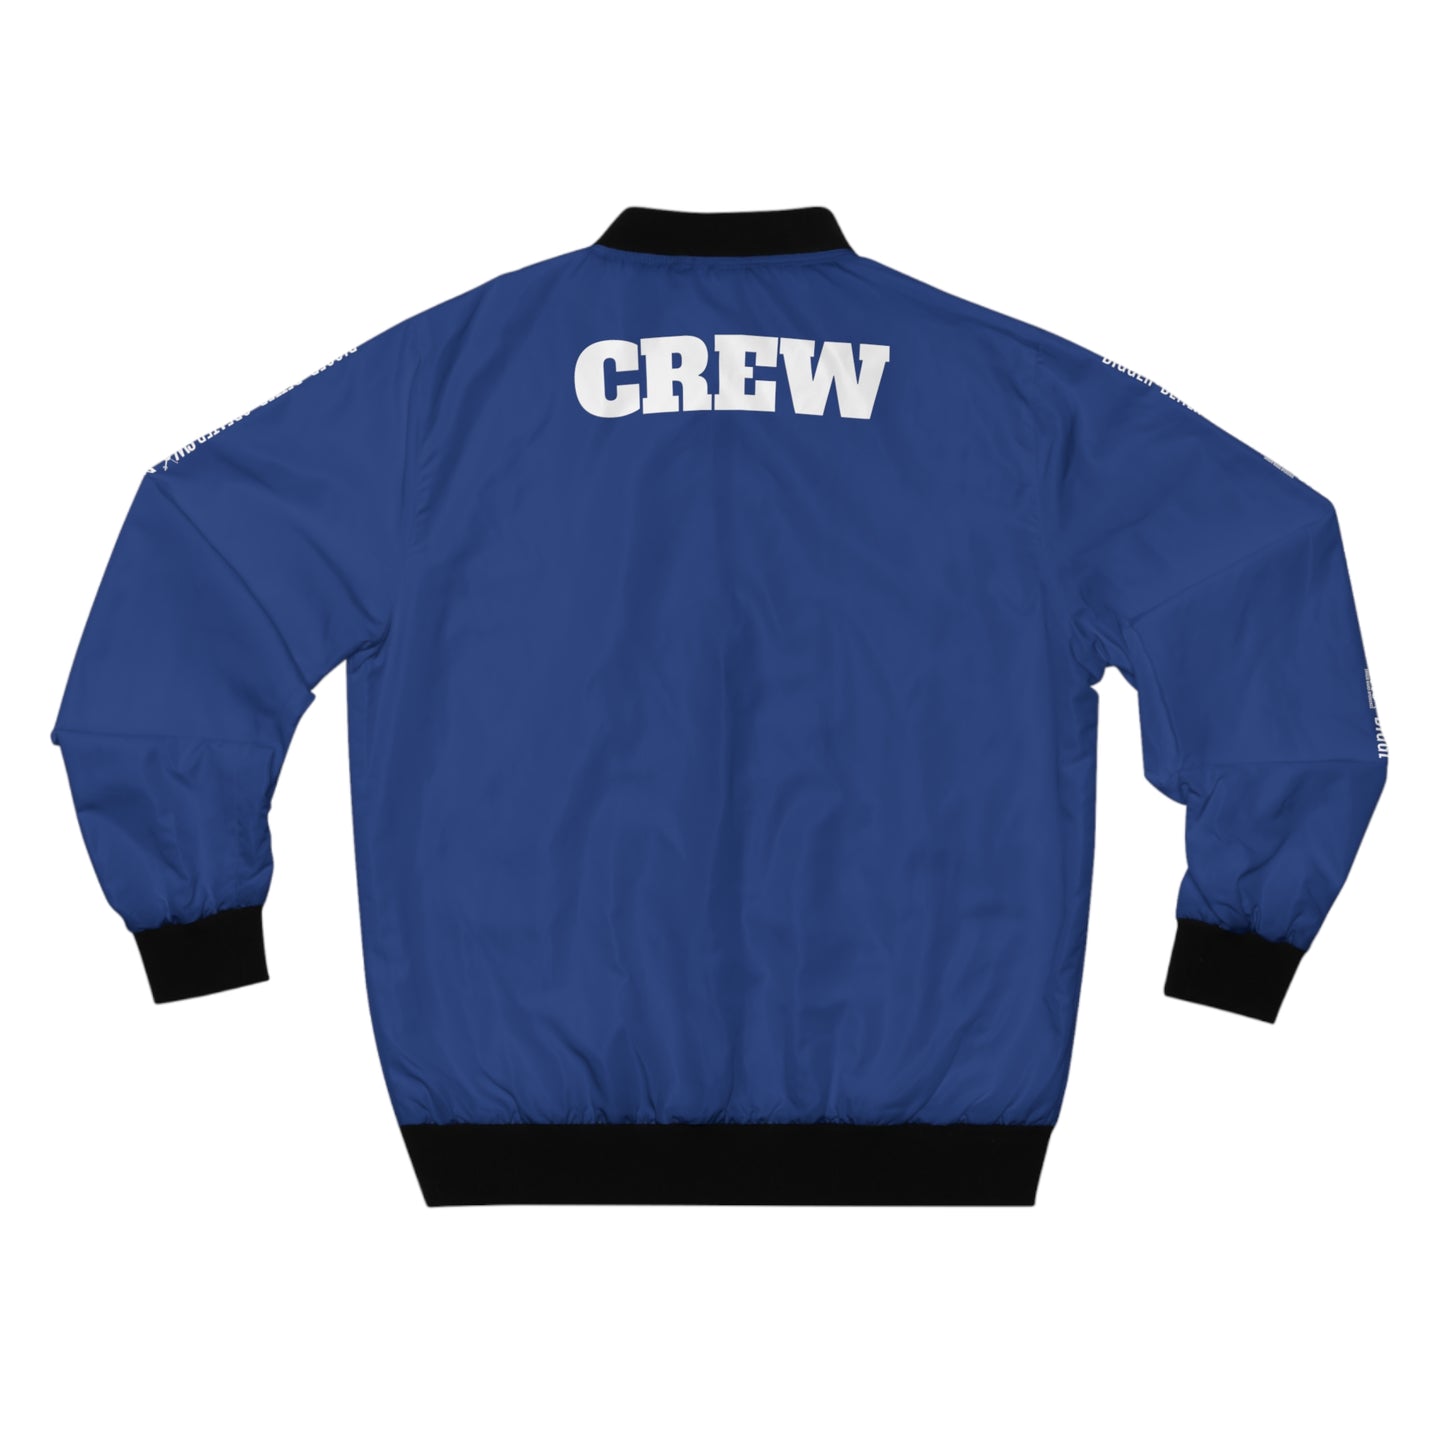 SWX "CREW" Bomber Jacket  - Blue